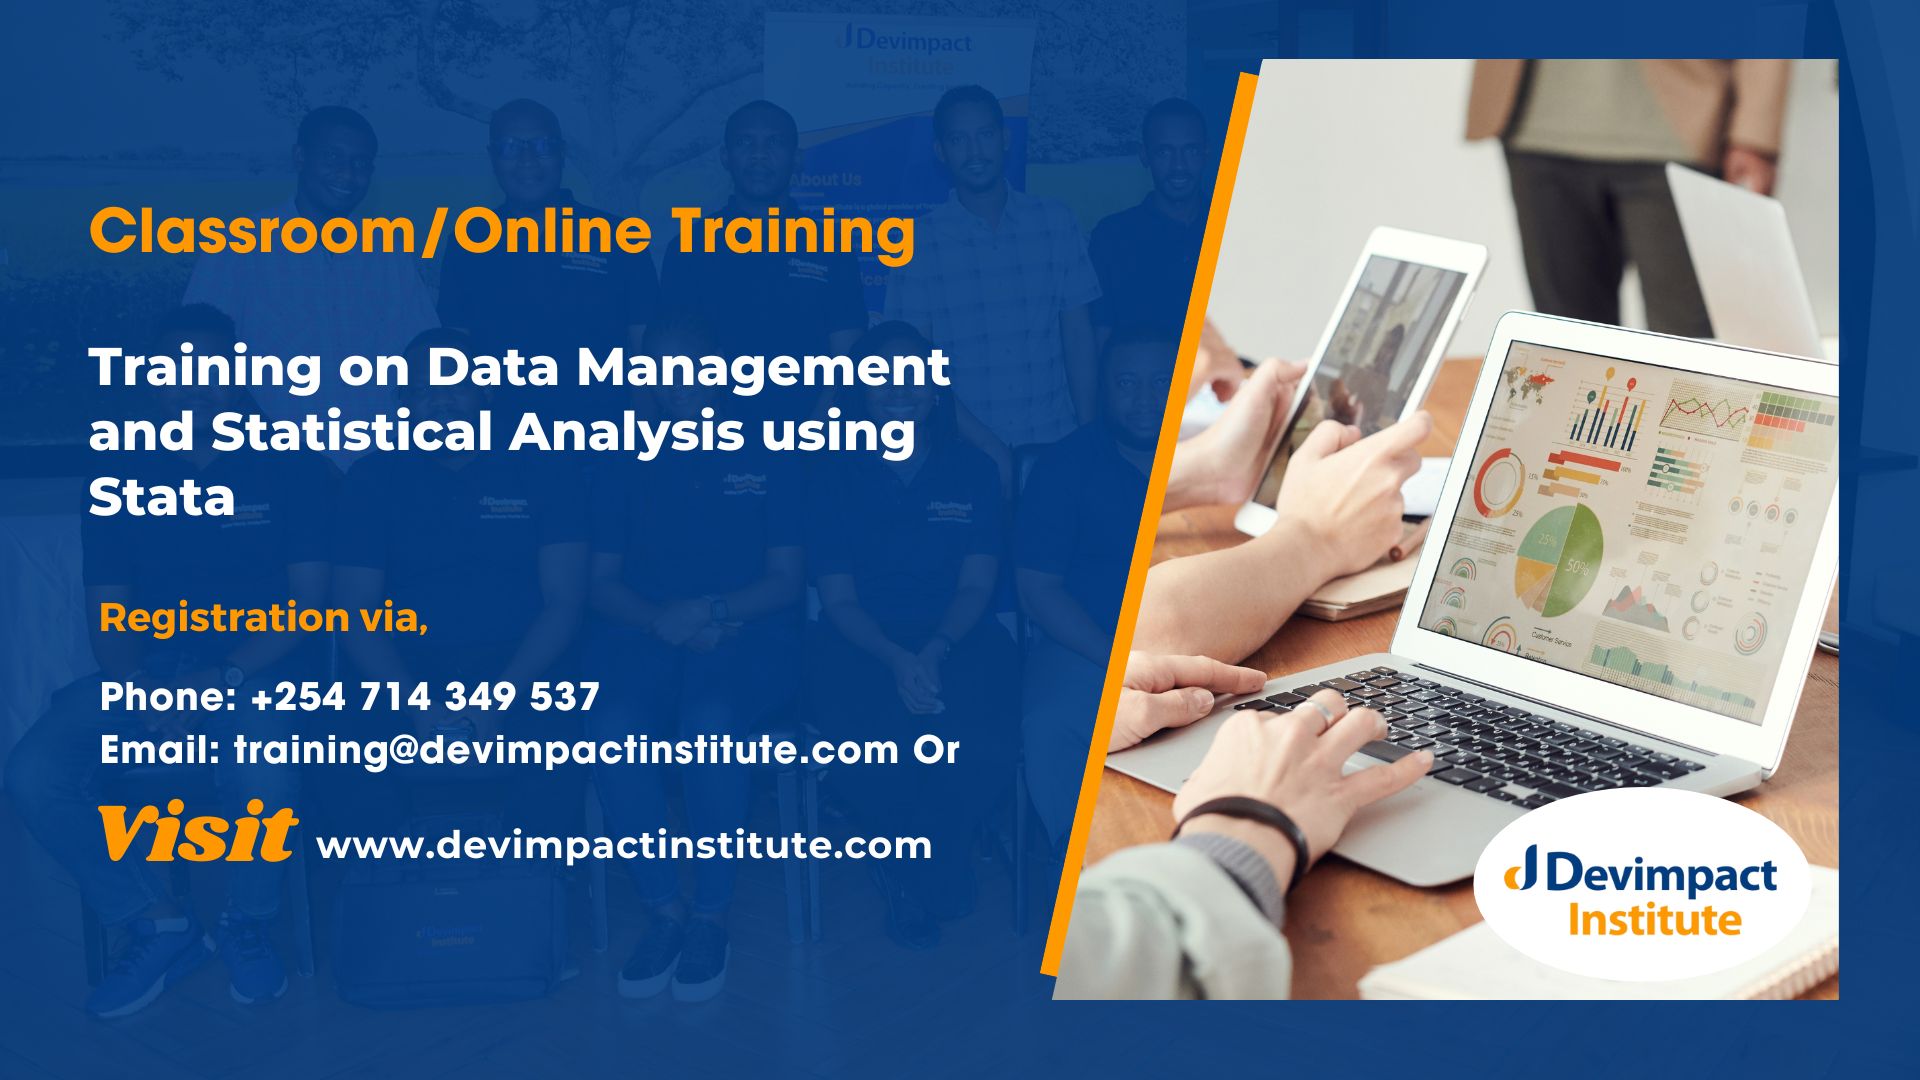 Training on Data Management and Statistical Analysis using Stata, Devimpact Institute, Nairobi, Kenya